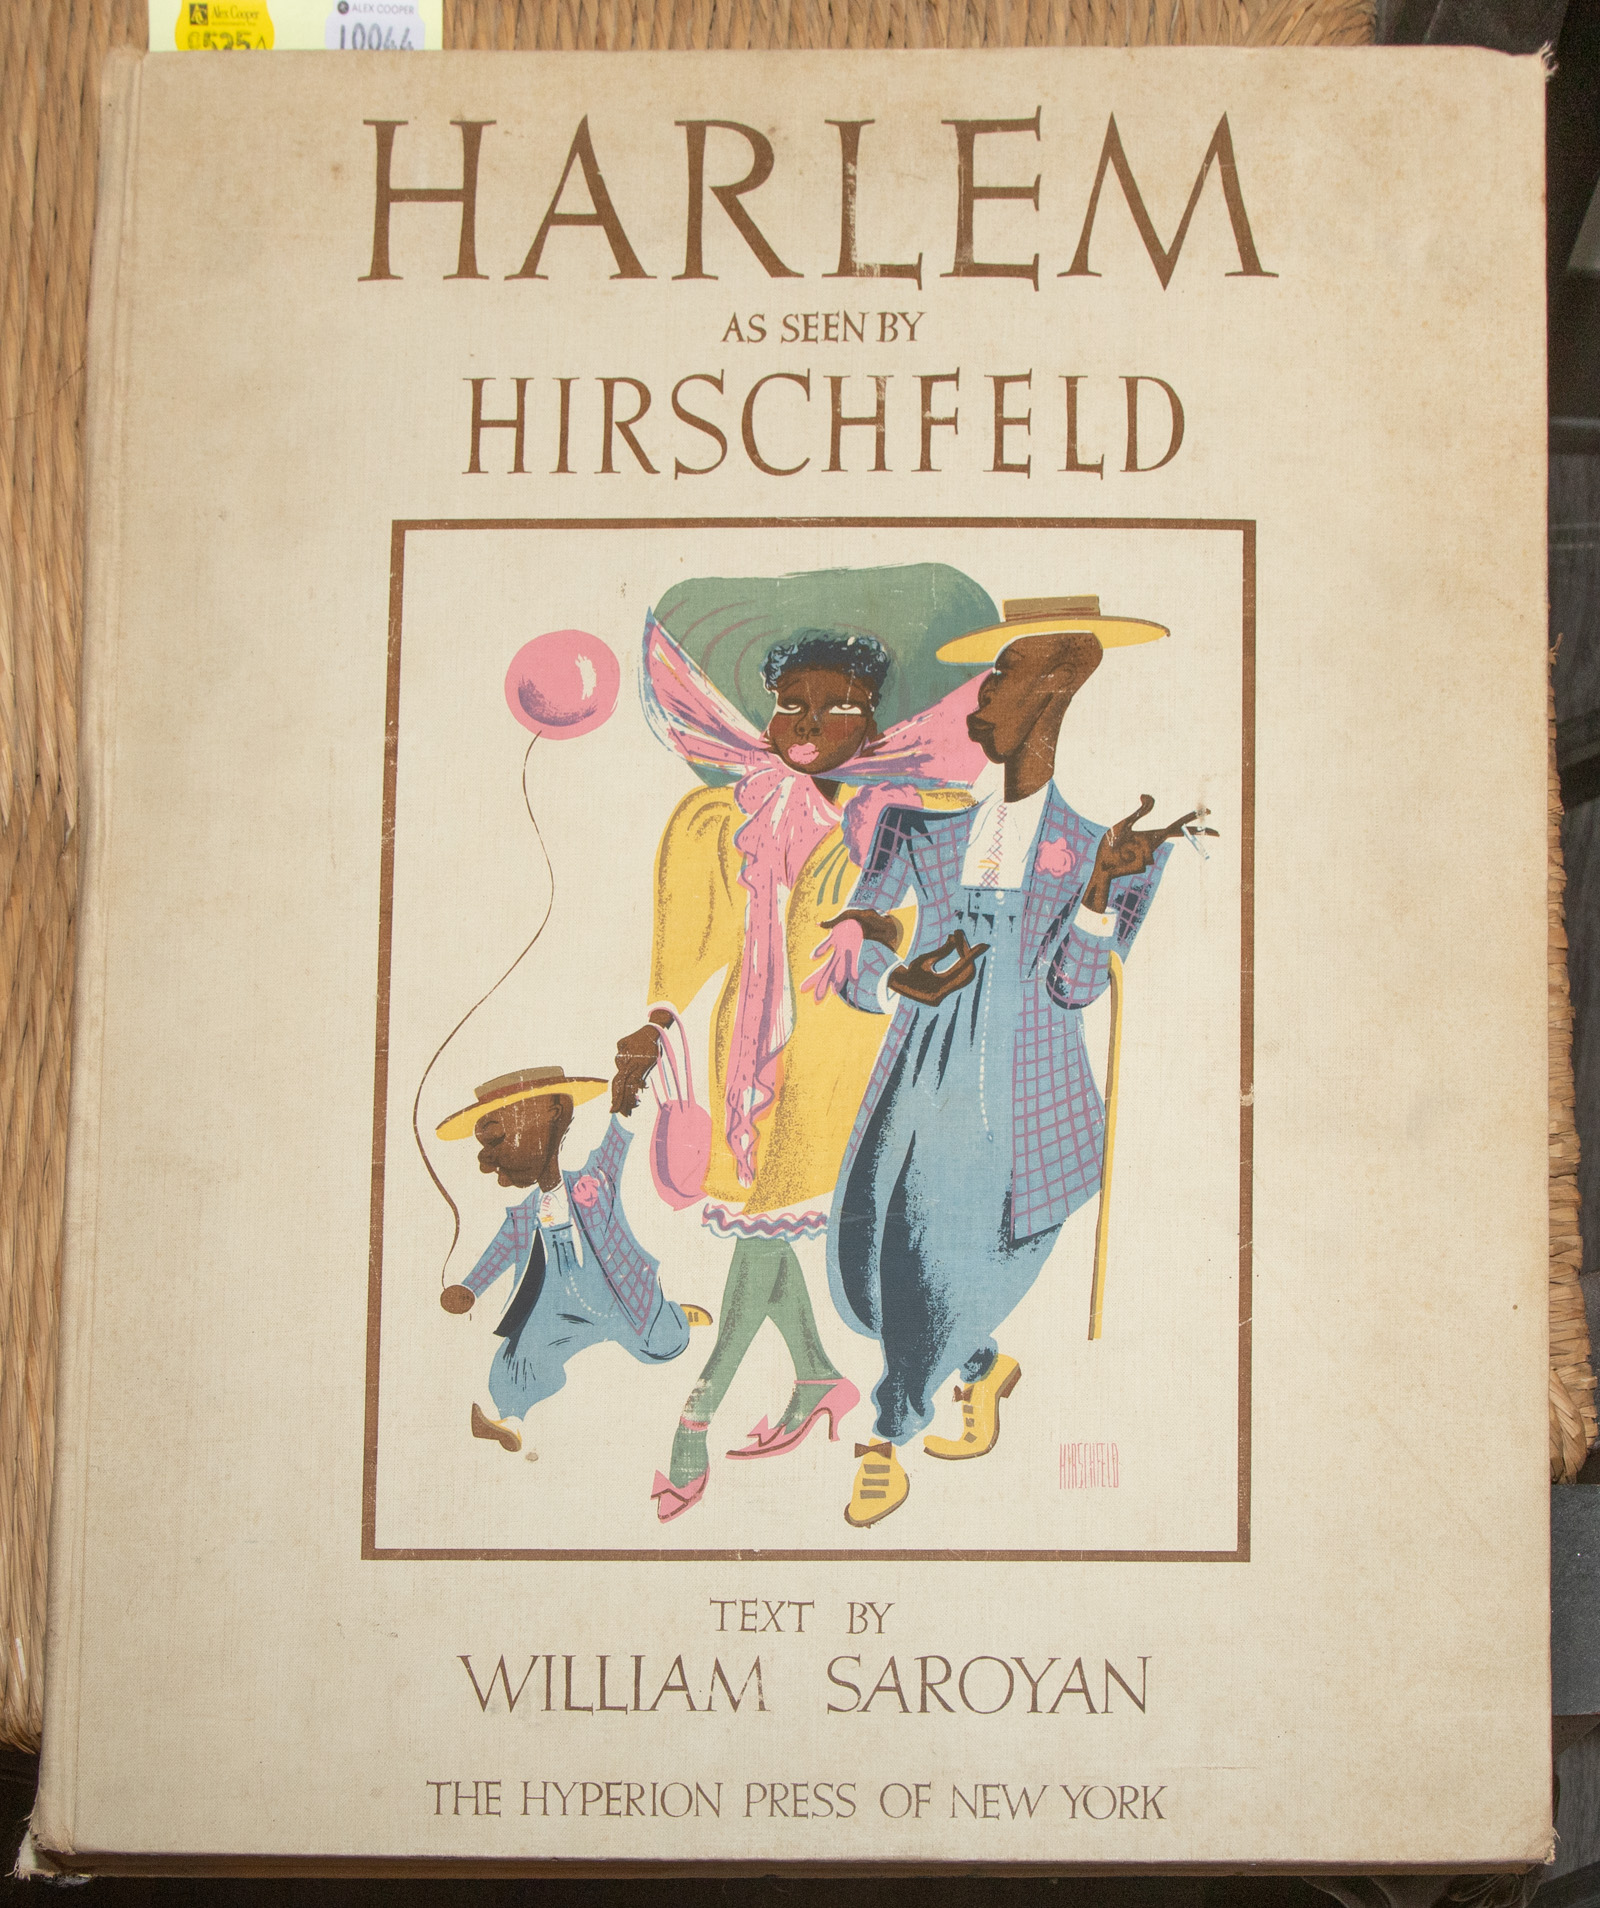 HARLEM AS SEEN BY HIRSCHFELD, LTD.